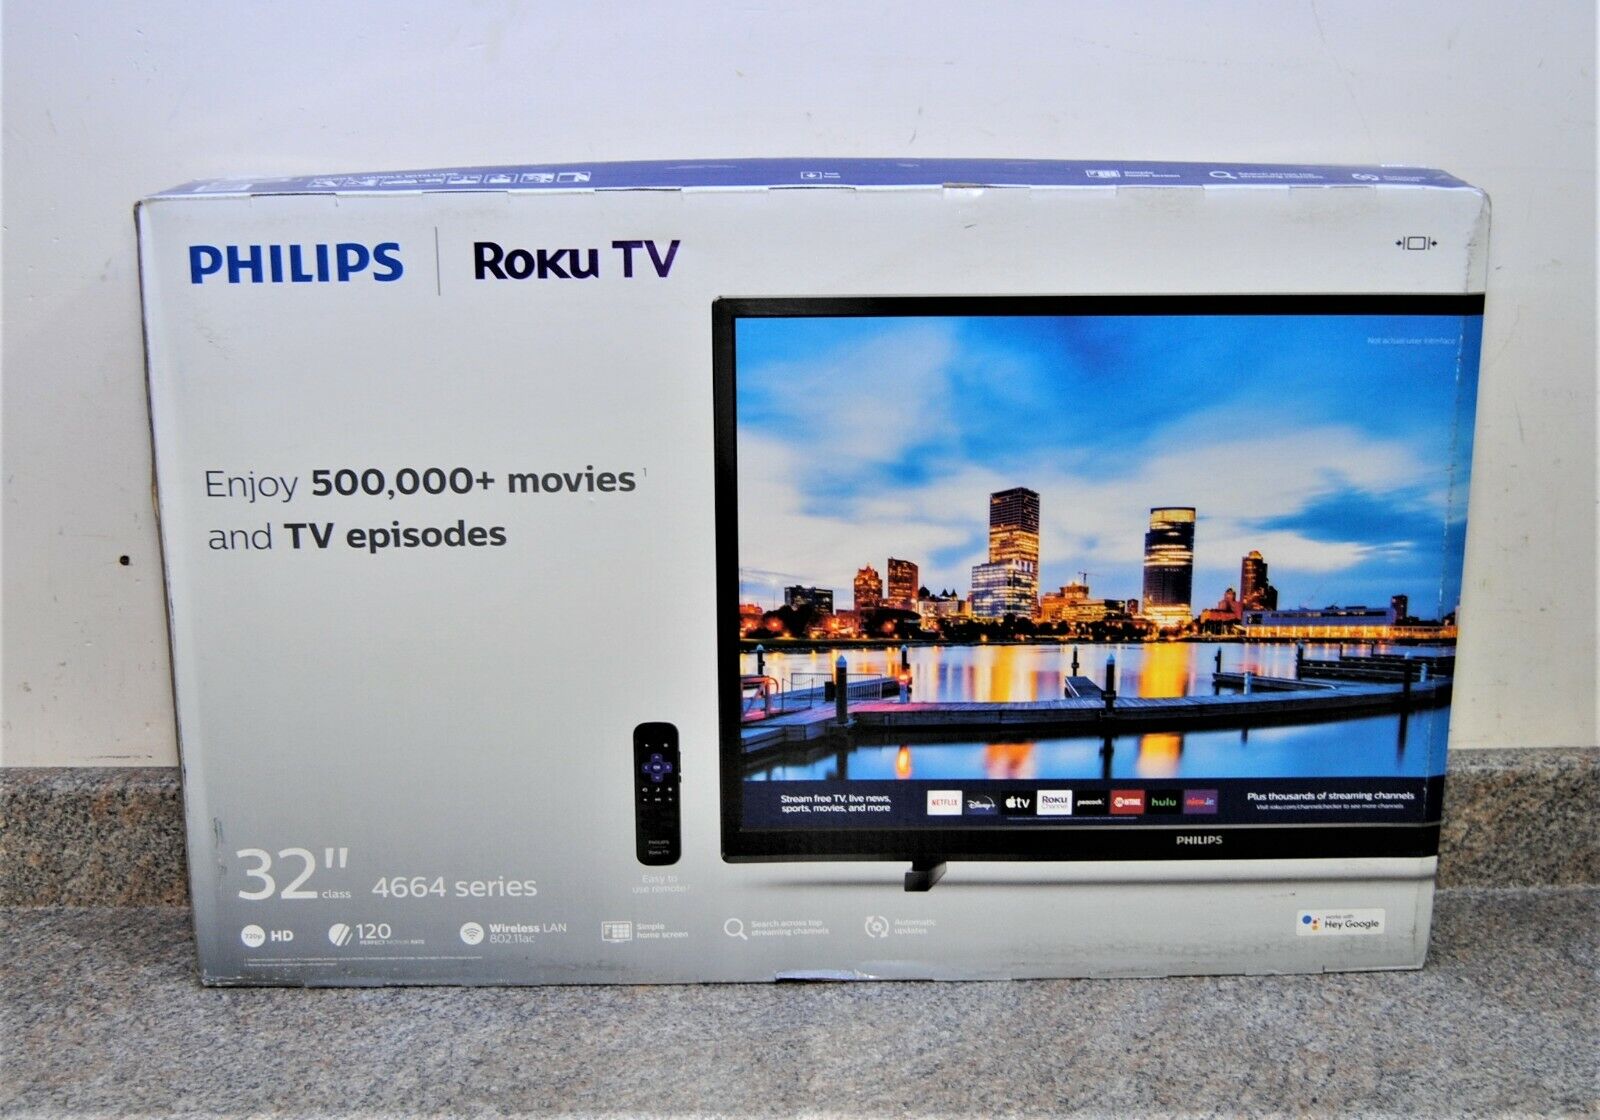 Philips Roku TV 32" 4664 Series